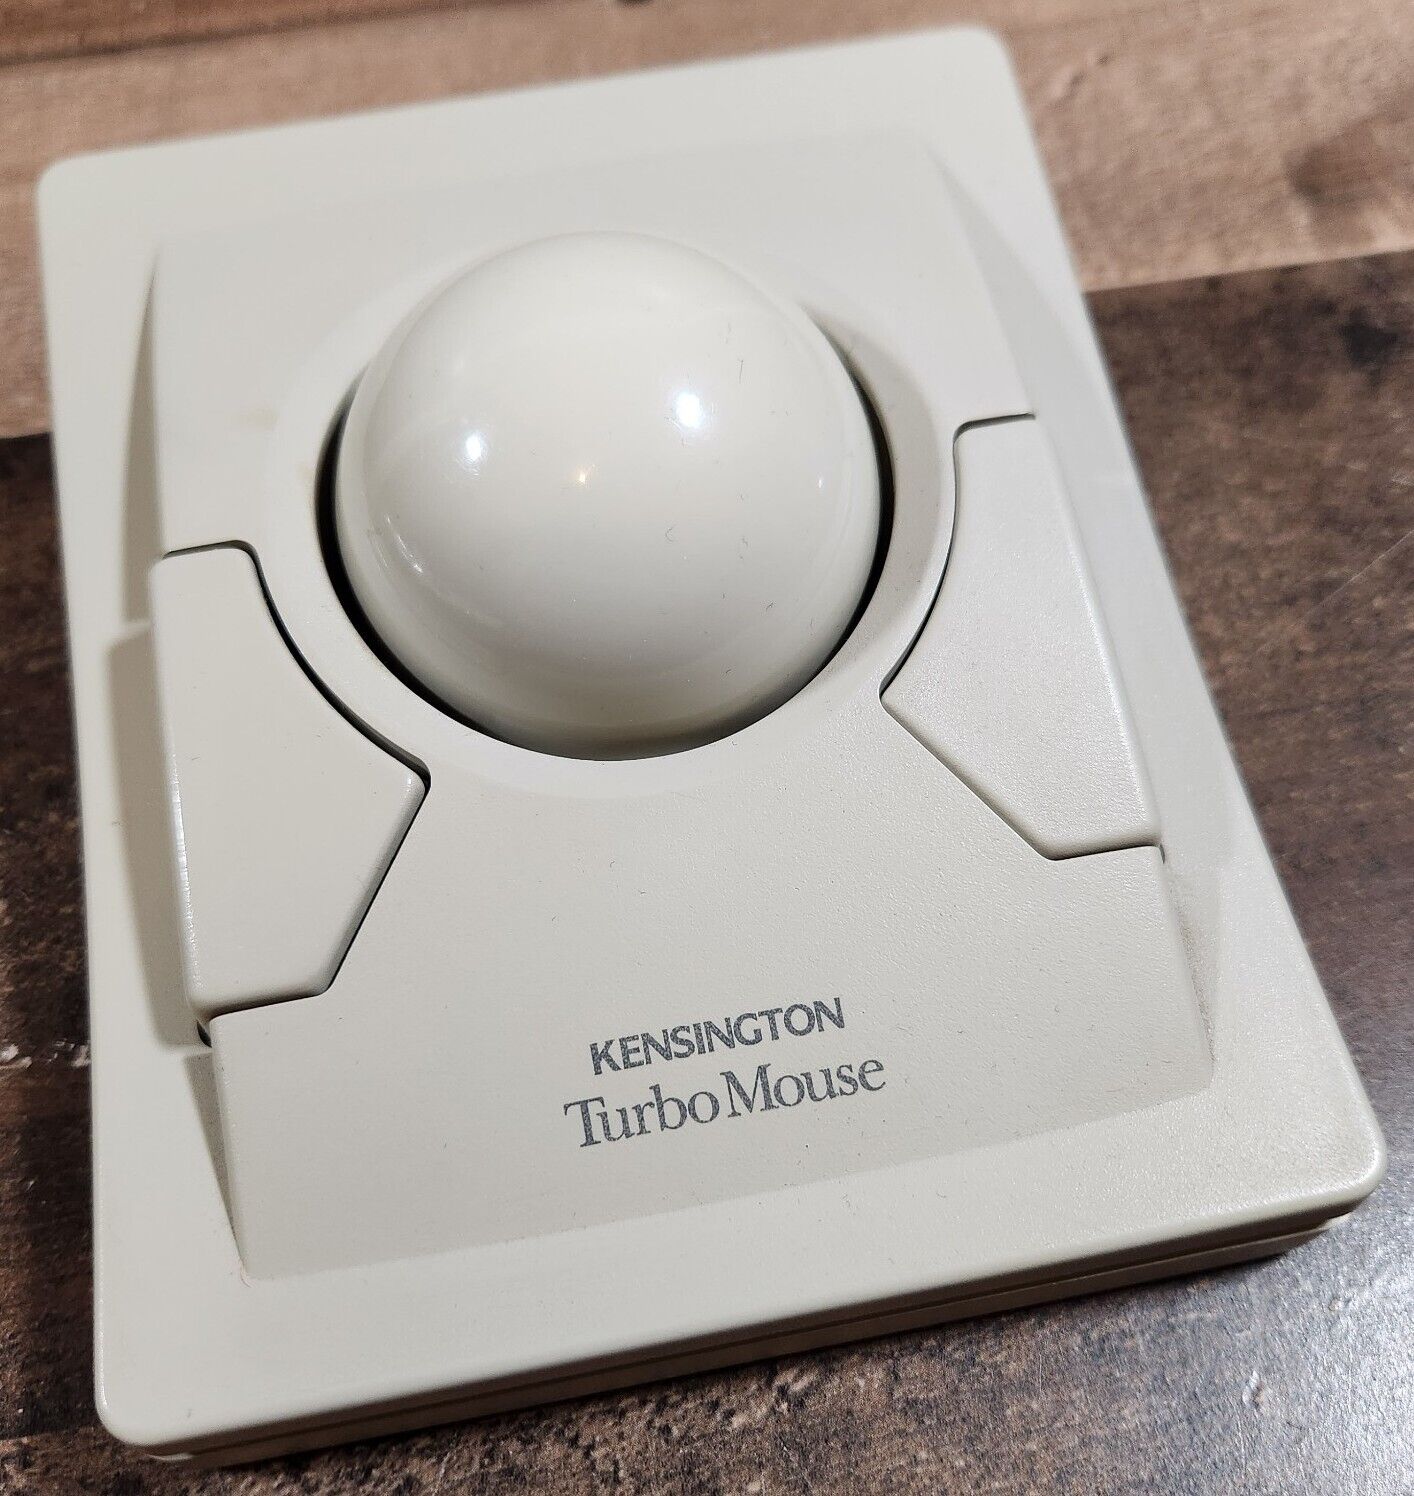 Apple Macintosh Kensington Turbo Mouse Trackball Model 64100 Vintage Computing